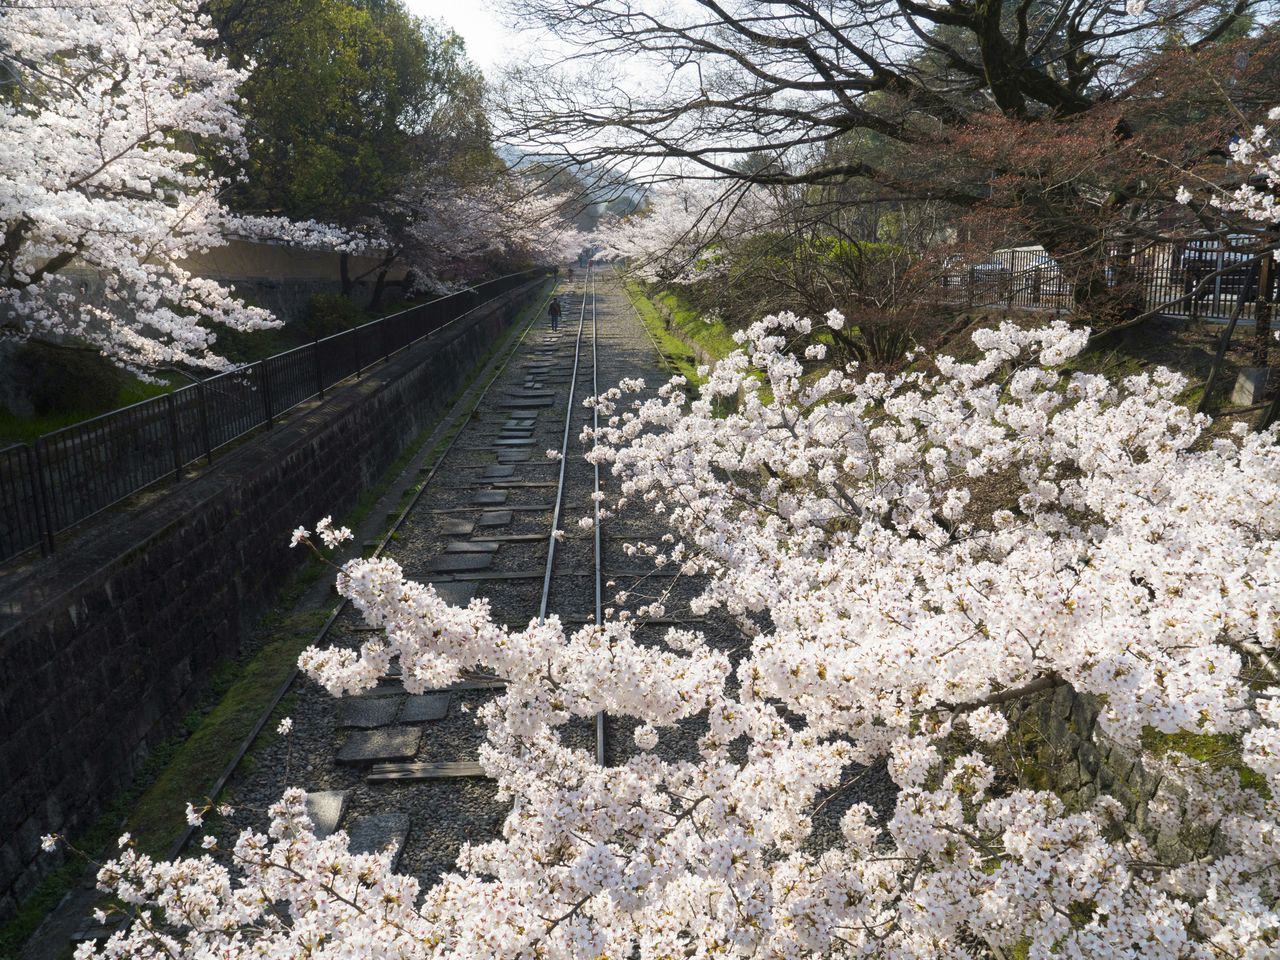 Enchanting somei yoshino cherry blossoms adorn the disused track.